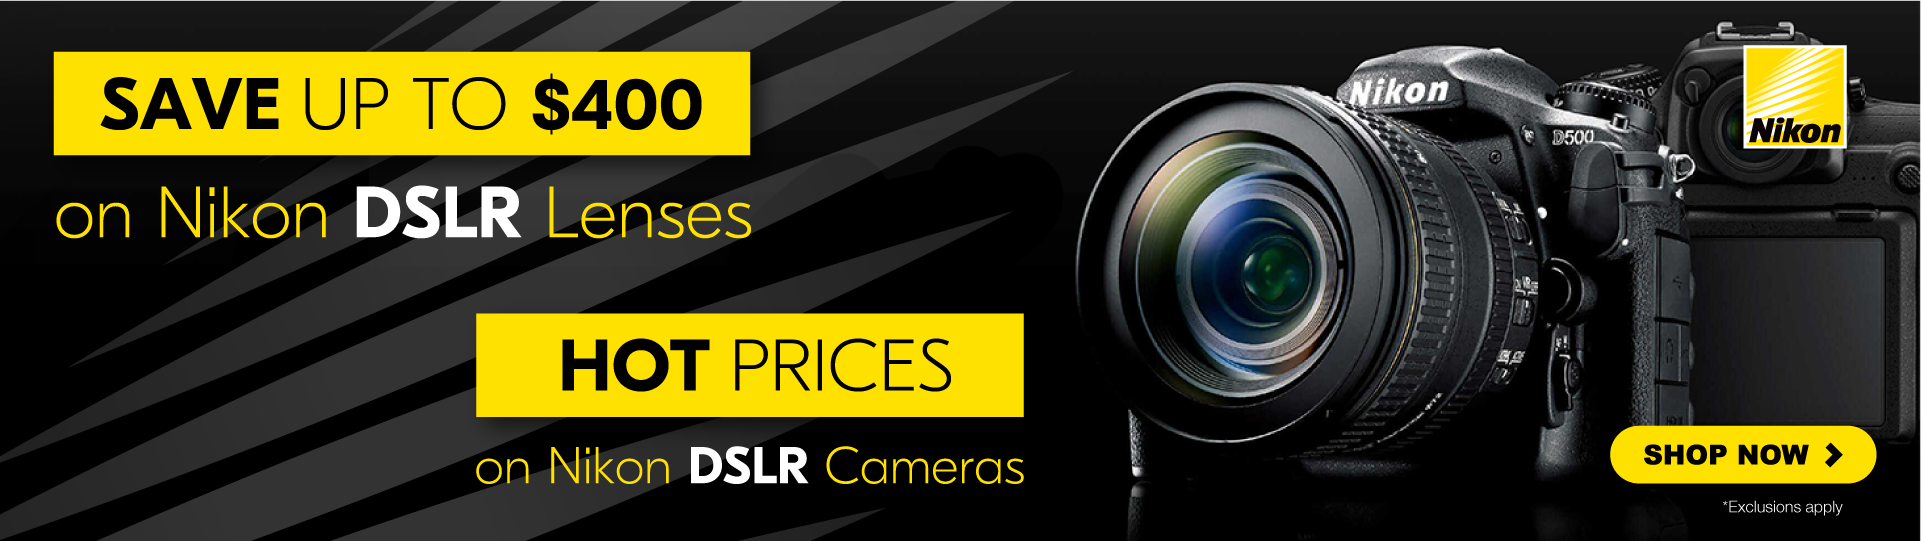 Up to $400 OFF on Nikon DSLR lenses at Digital Camera Warehouse